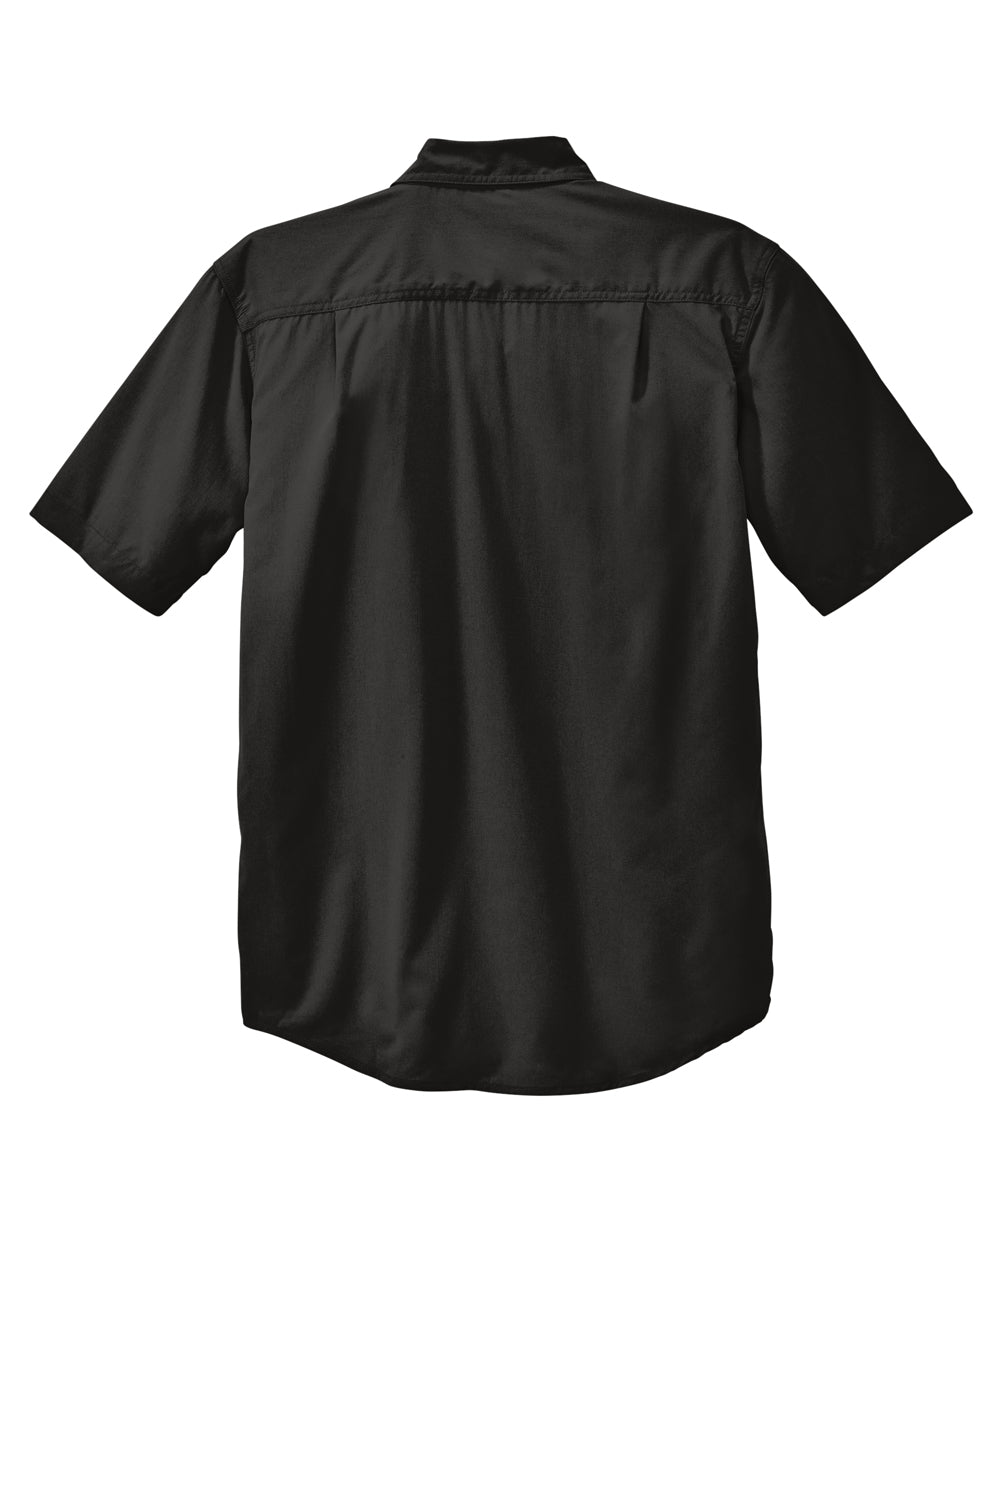 Carhartt CT105292 Mens Force Moisture Wicking Short Sleeve Button Down Shirt w/ Double Pockets Black Flat Back